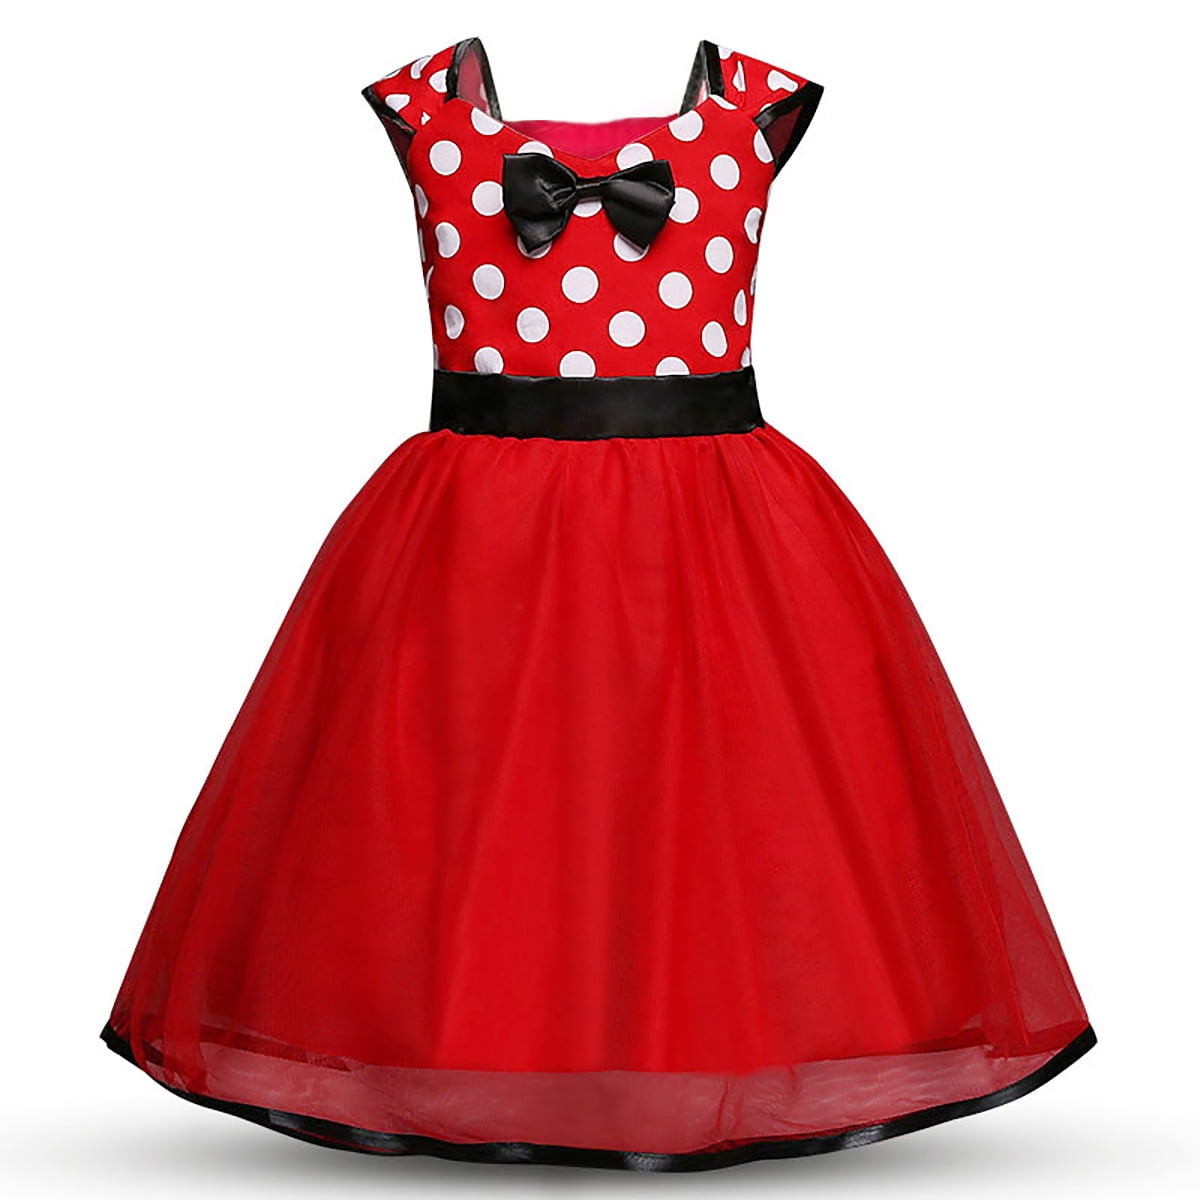 Toddler Baby Girl Minnie Mouse Polka Dot Dress Tutu Skirt Birthday Party Costume 